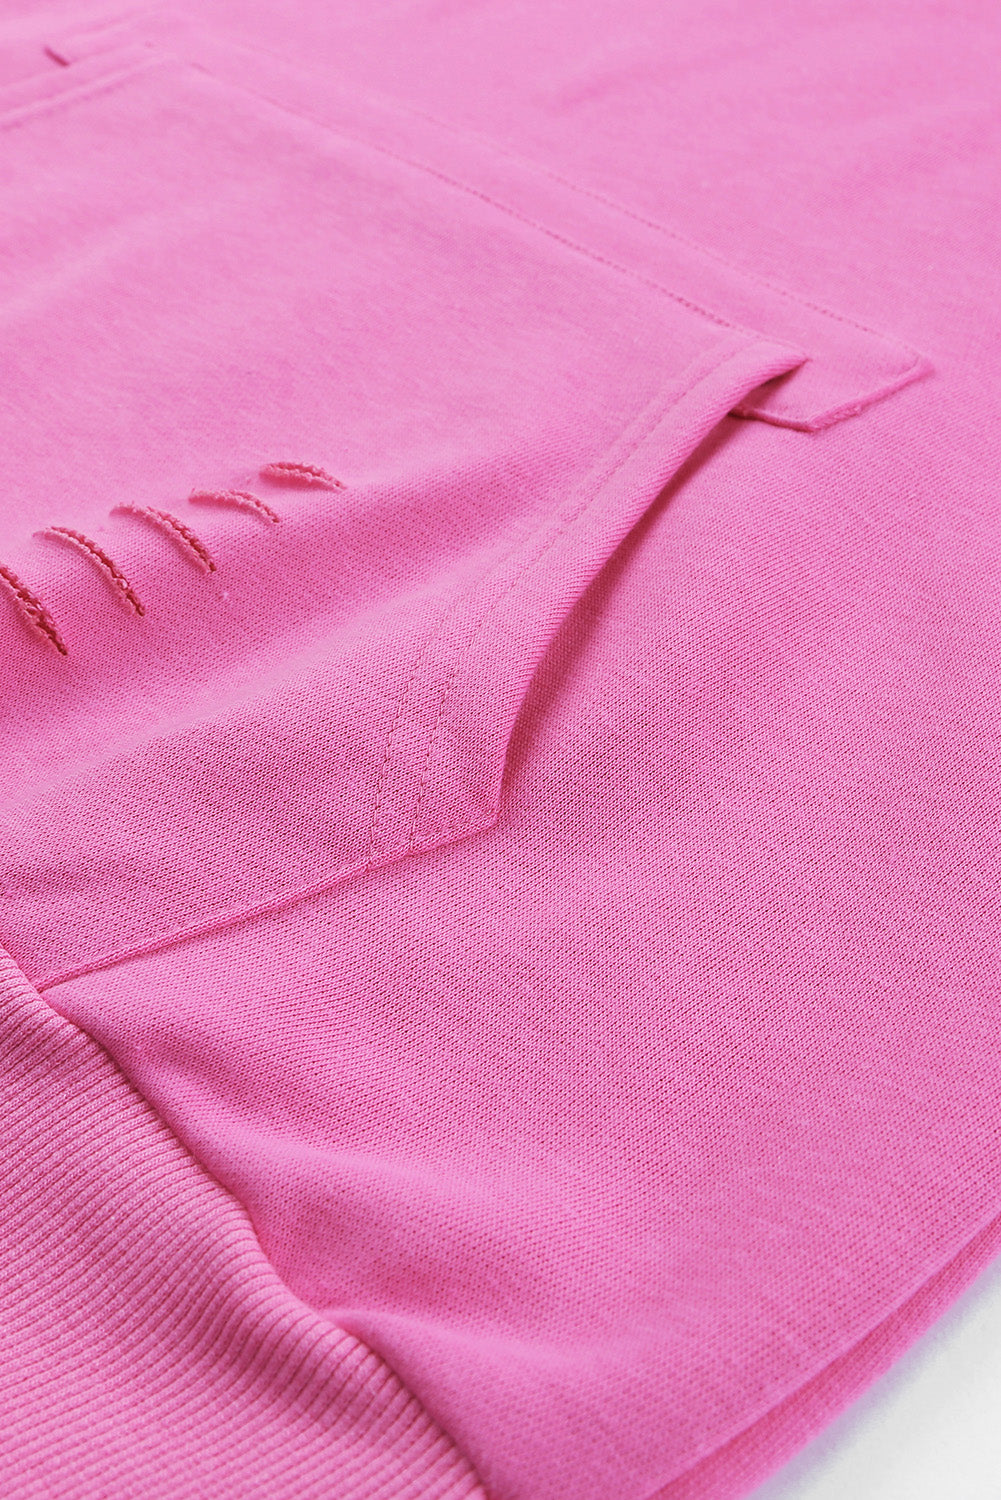 Pink Solid Ripped Hooded Sweatshirt with Kangaroo Pocket